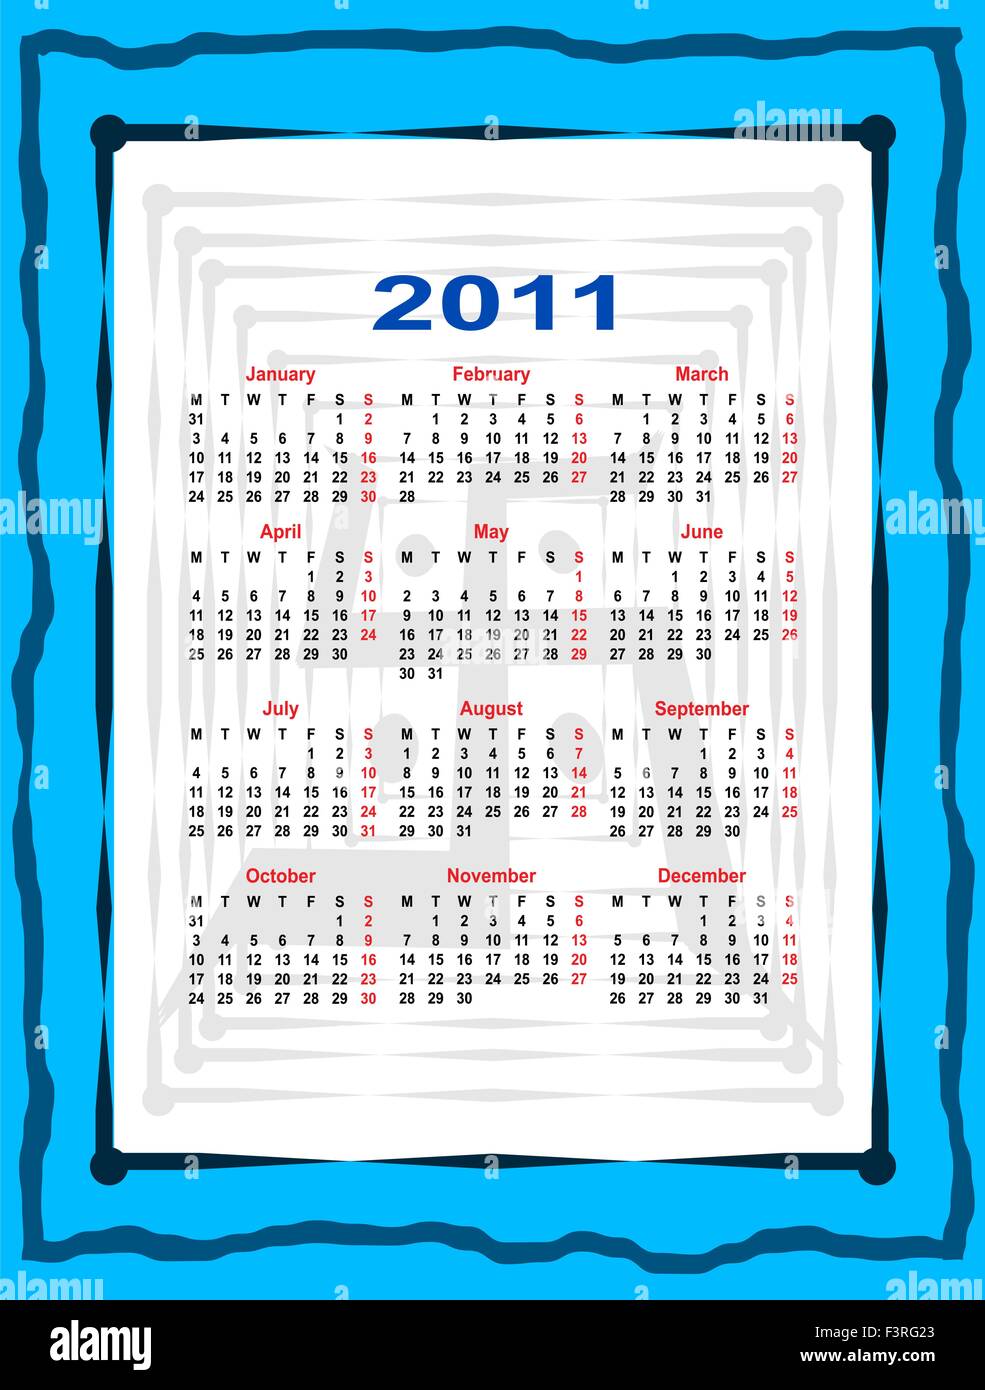 Calendar 2011 Stock Vector Images - Alamy